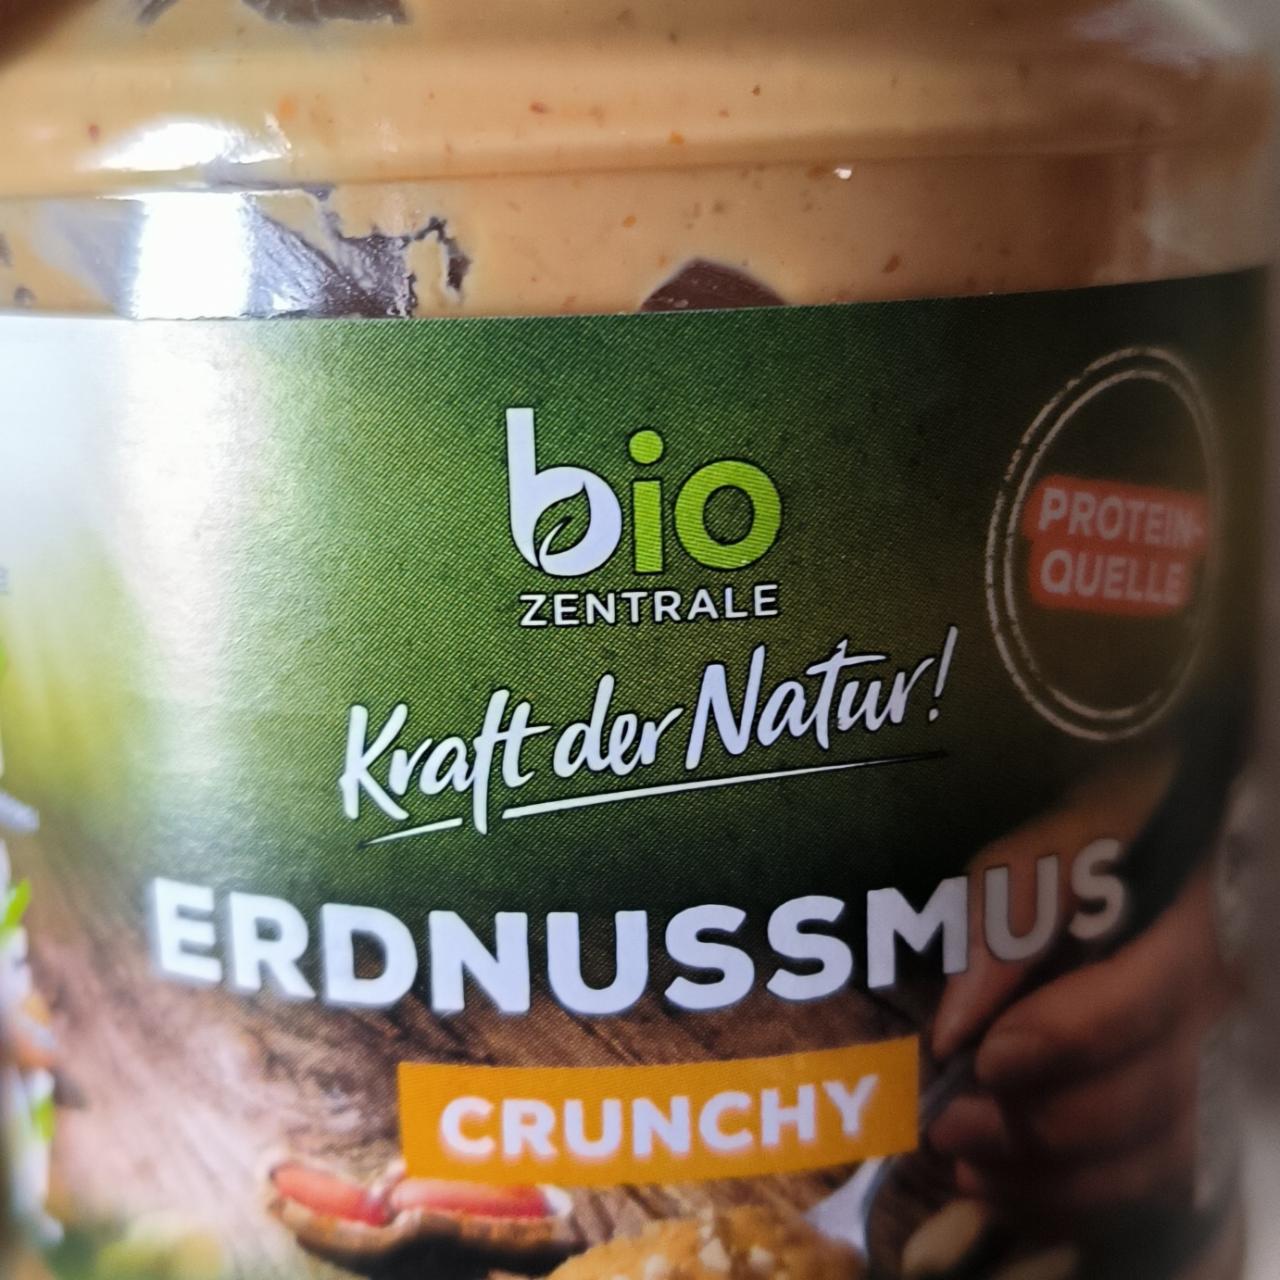 Zdjęcia - Erdnussmus Crunchy Bio Zentrale